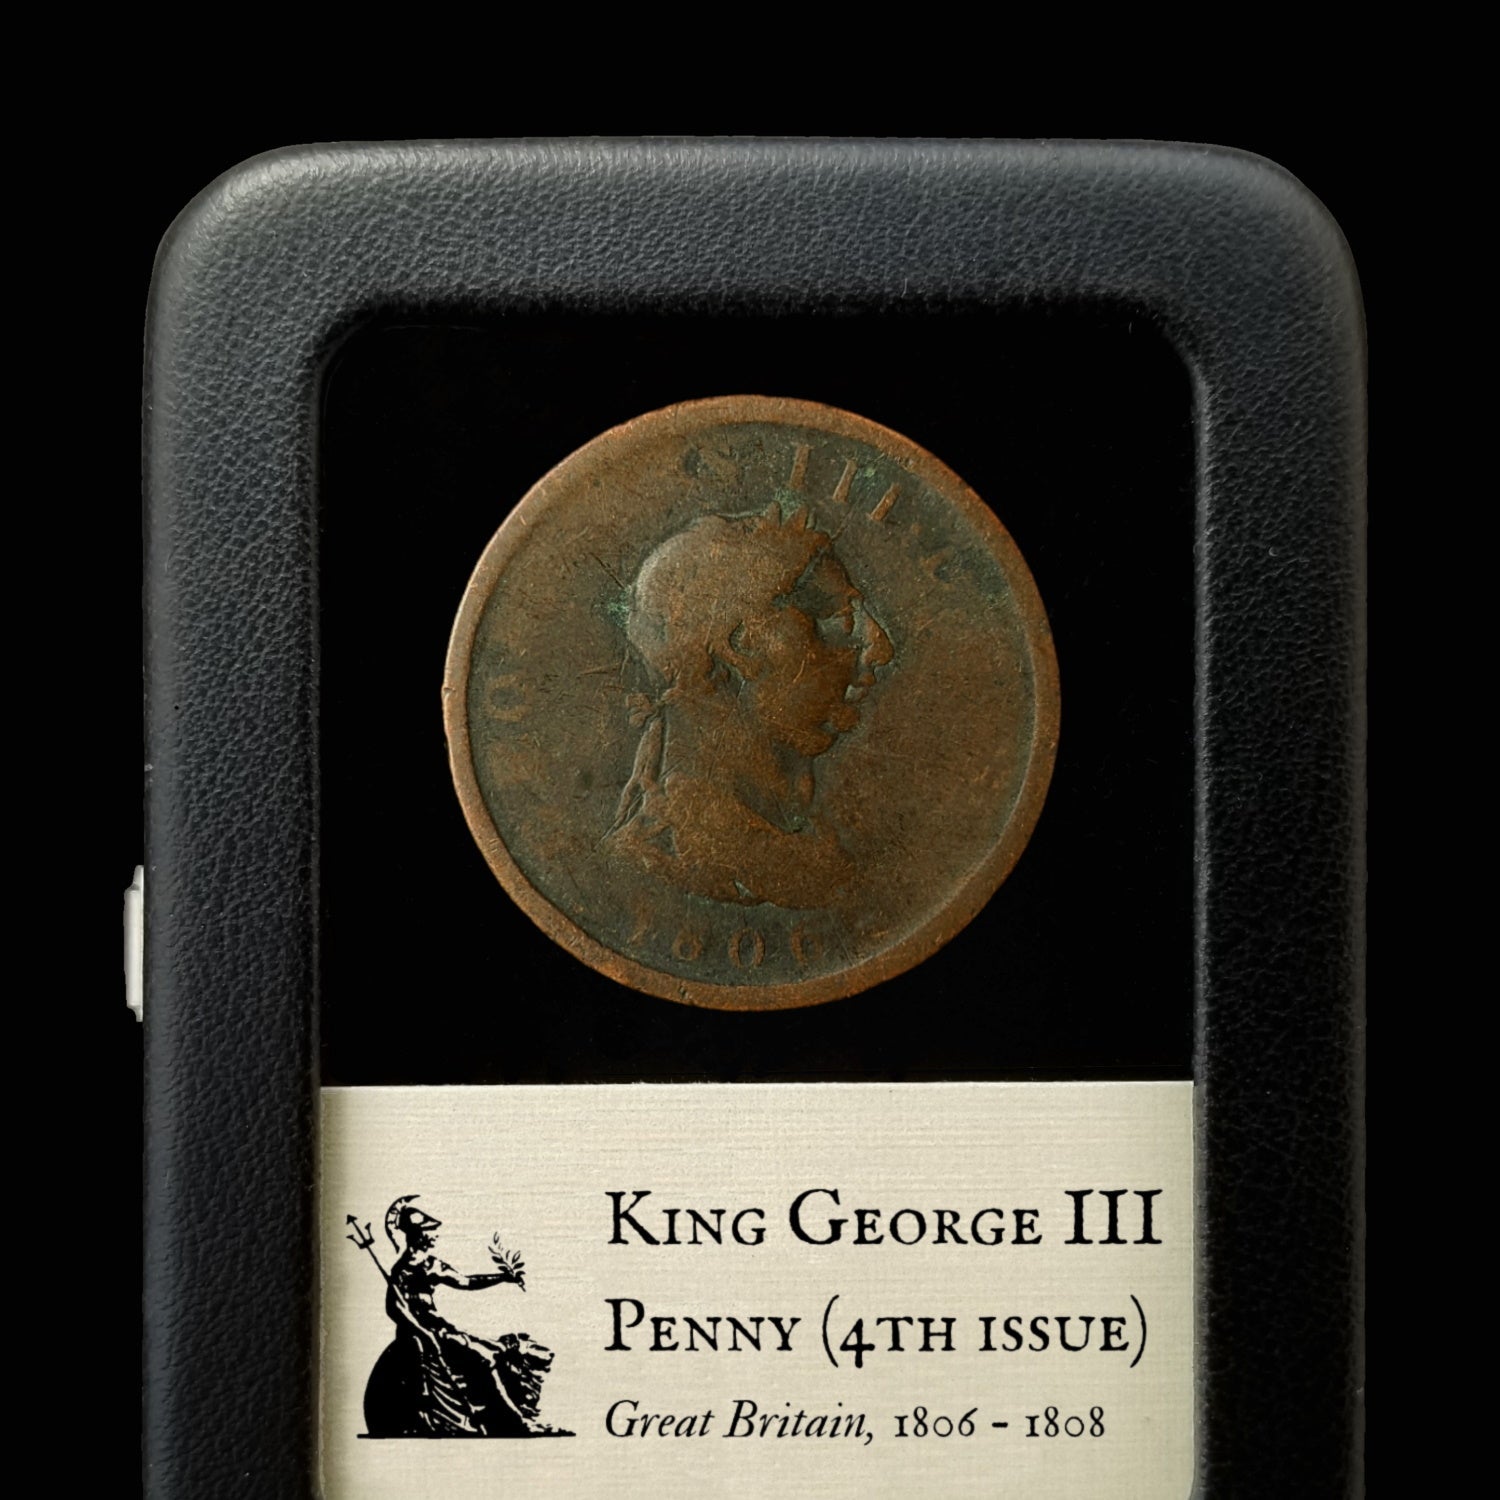 George III, Low Grade Penny - 1806 - Great Britain